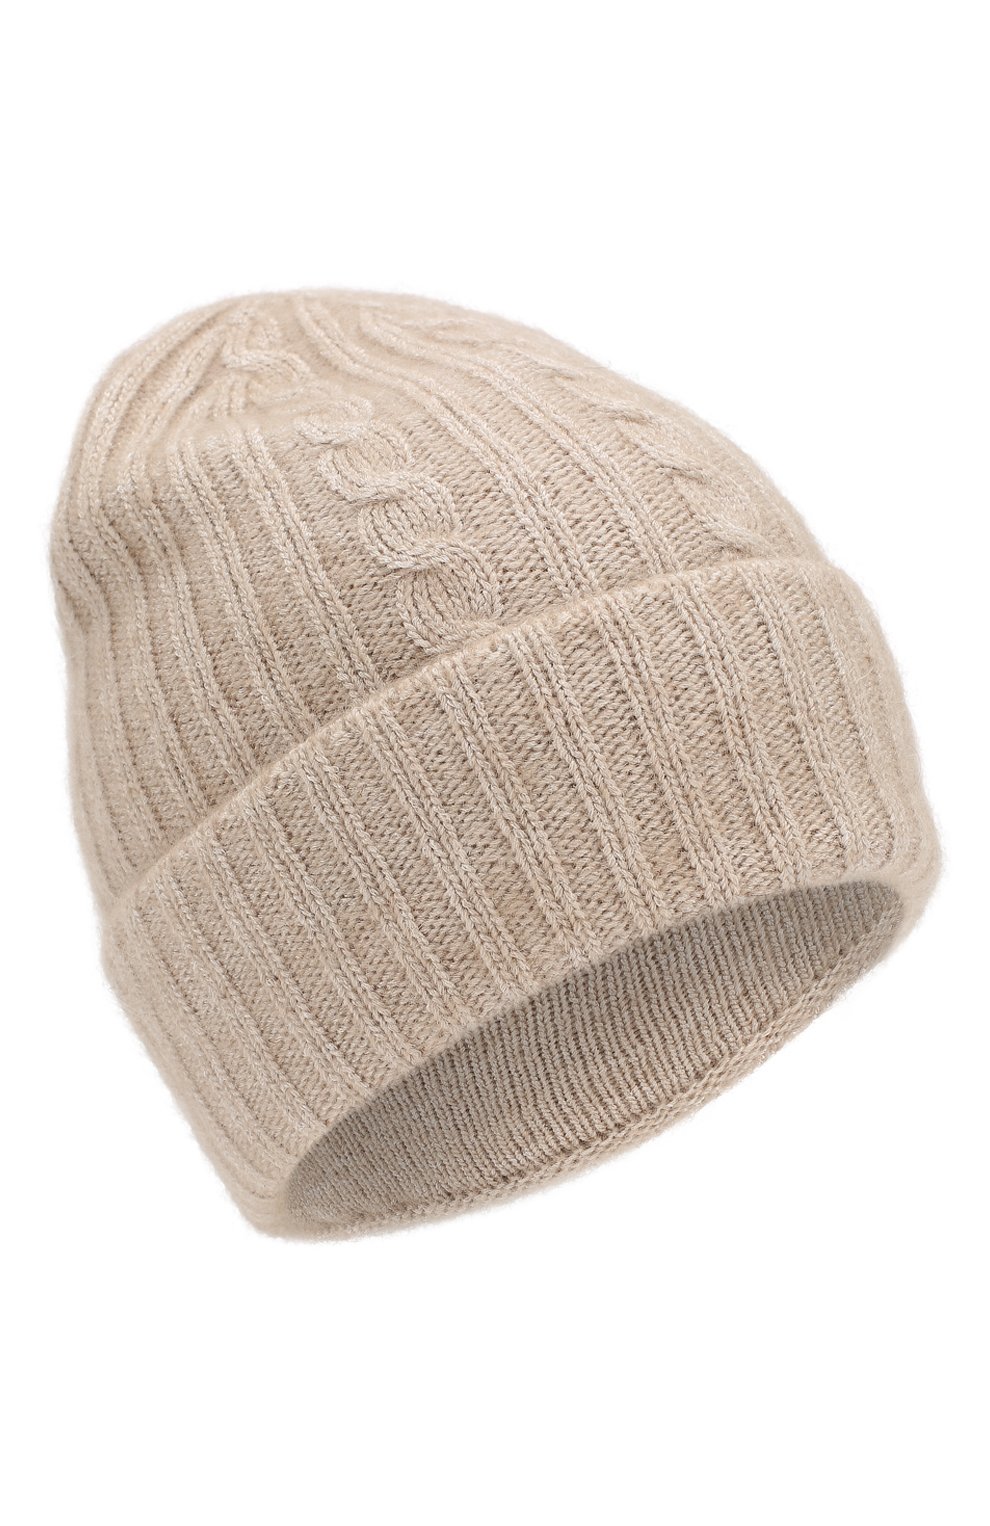 Женская шапка valencia CANOE светло-бежевого цвета, арт. 4918352 | Фото 1 (Материал: Текстиль, Вискоза; Статус проверки: Проверена категория)